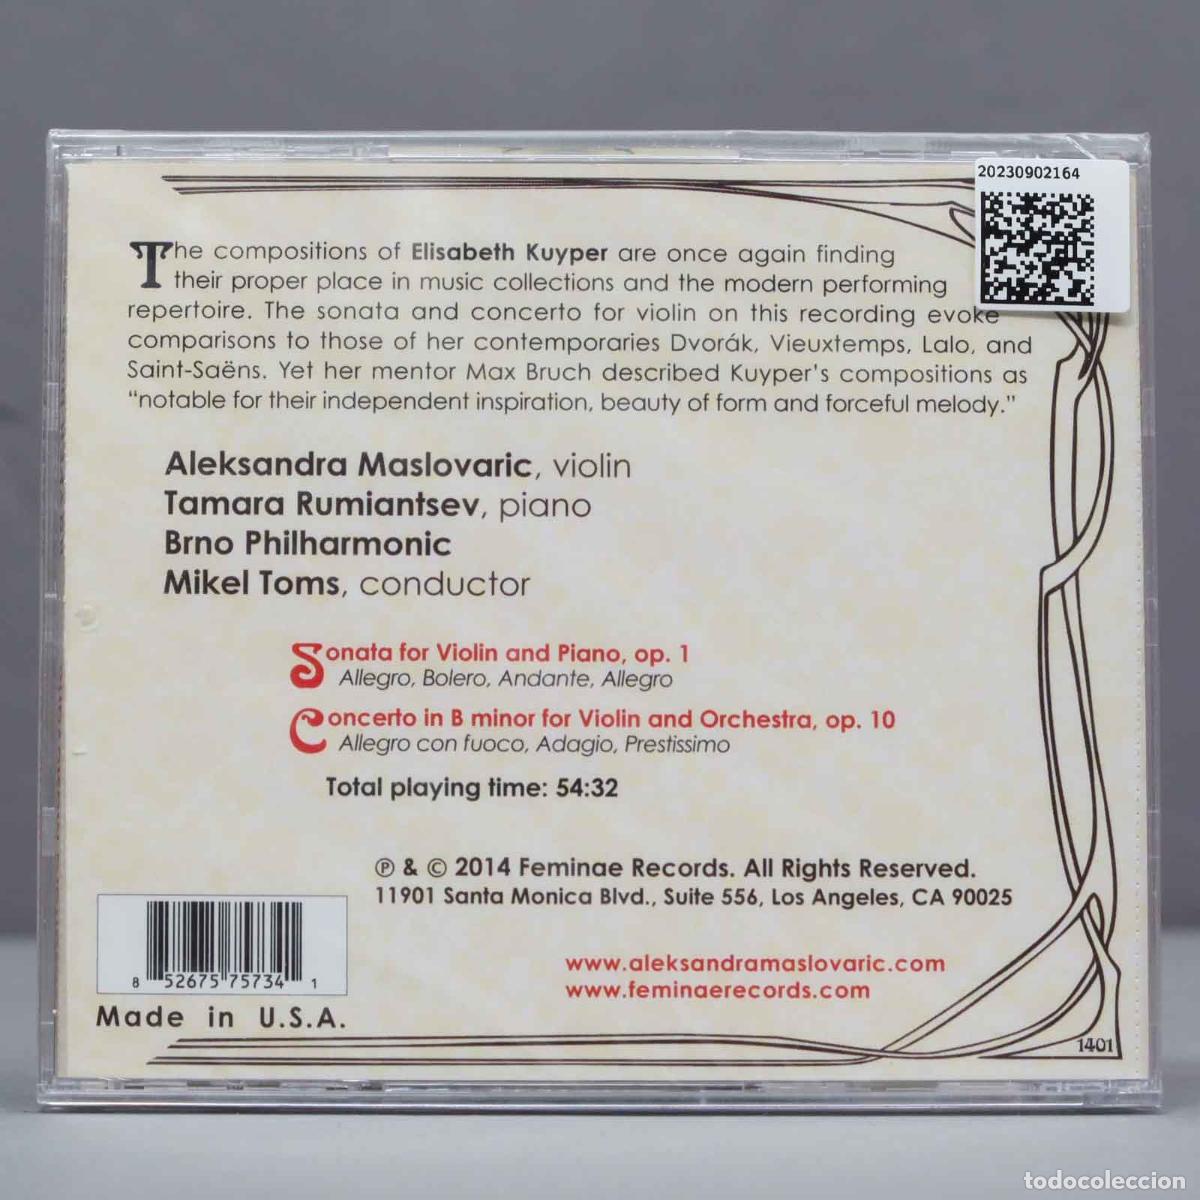 cd. aleksandra maslovaric. kuyper rediscovering - Buy CD's of ...